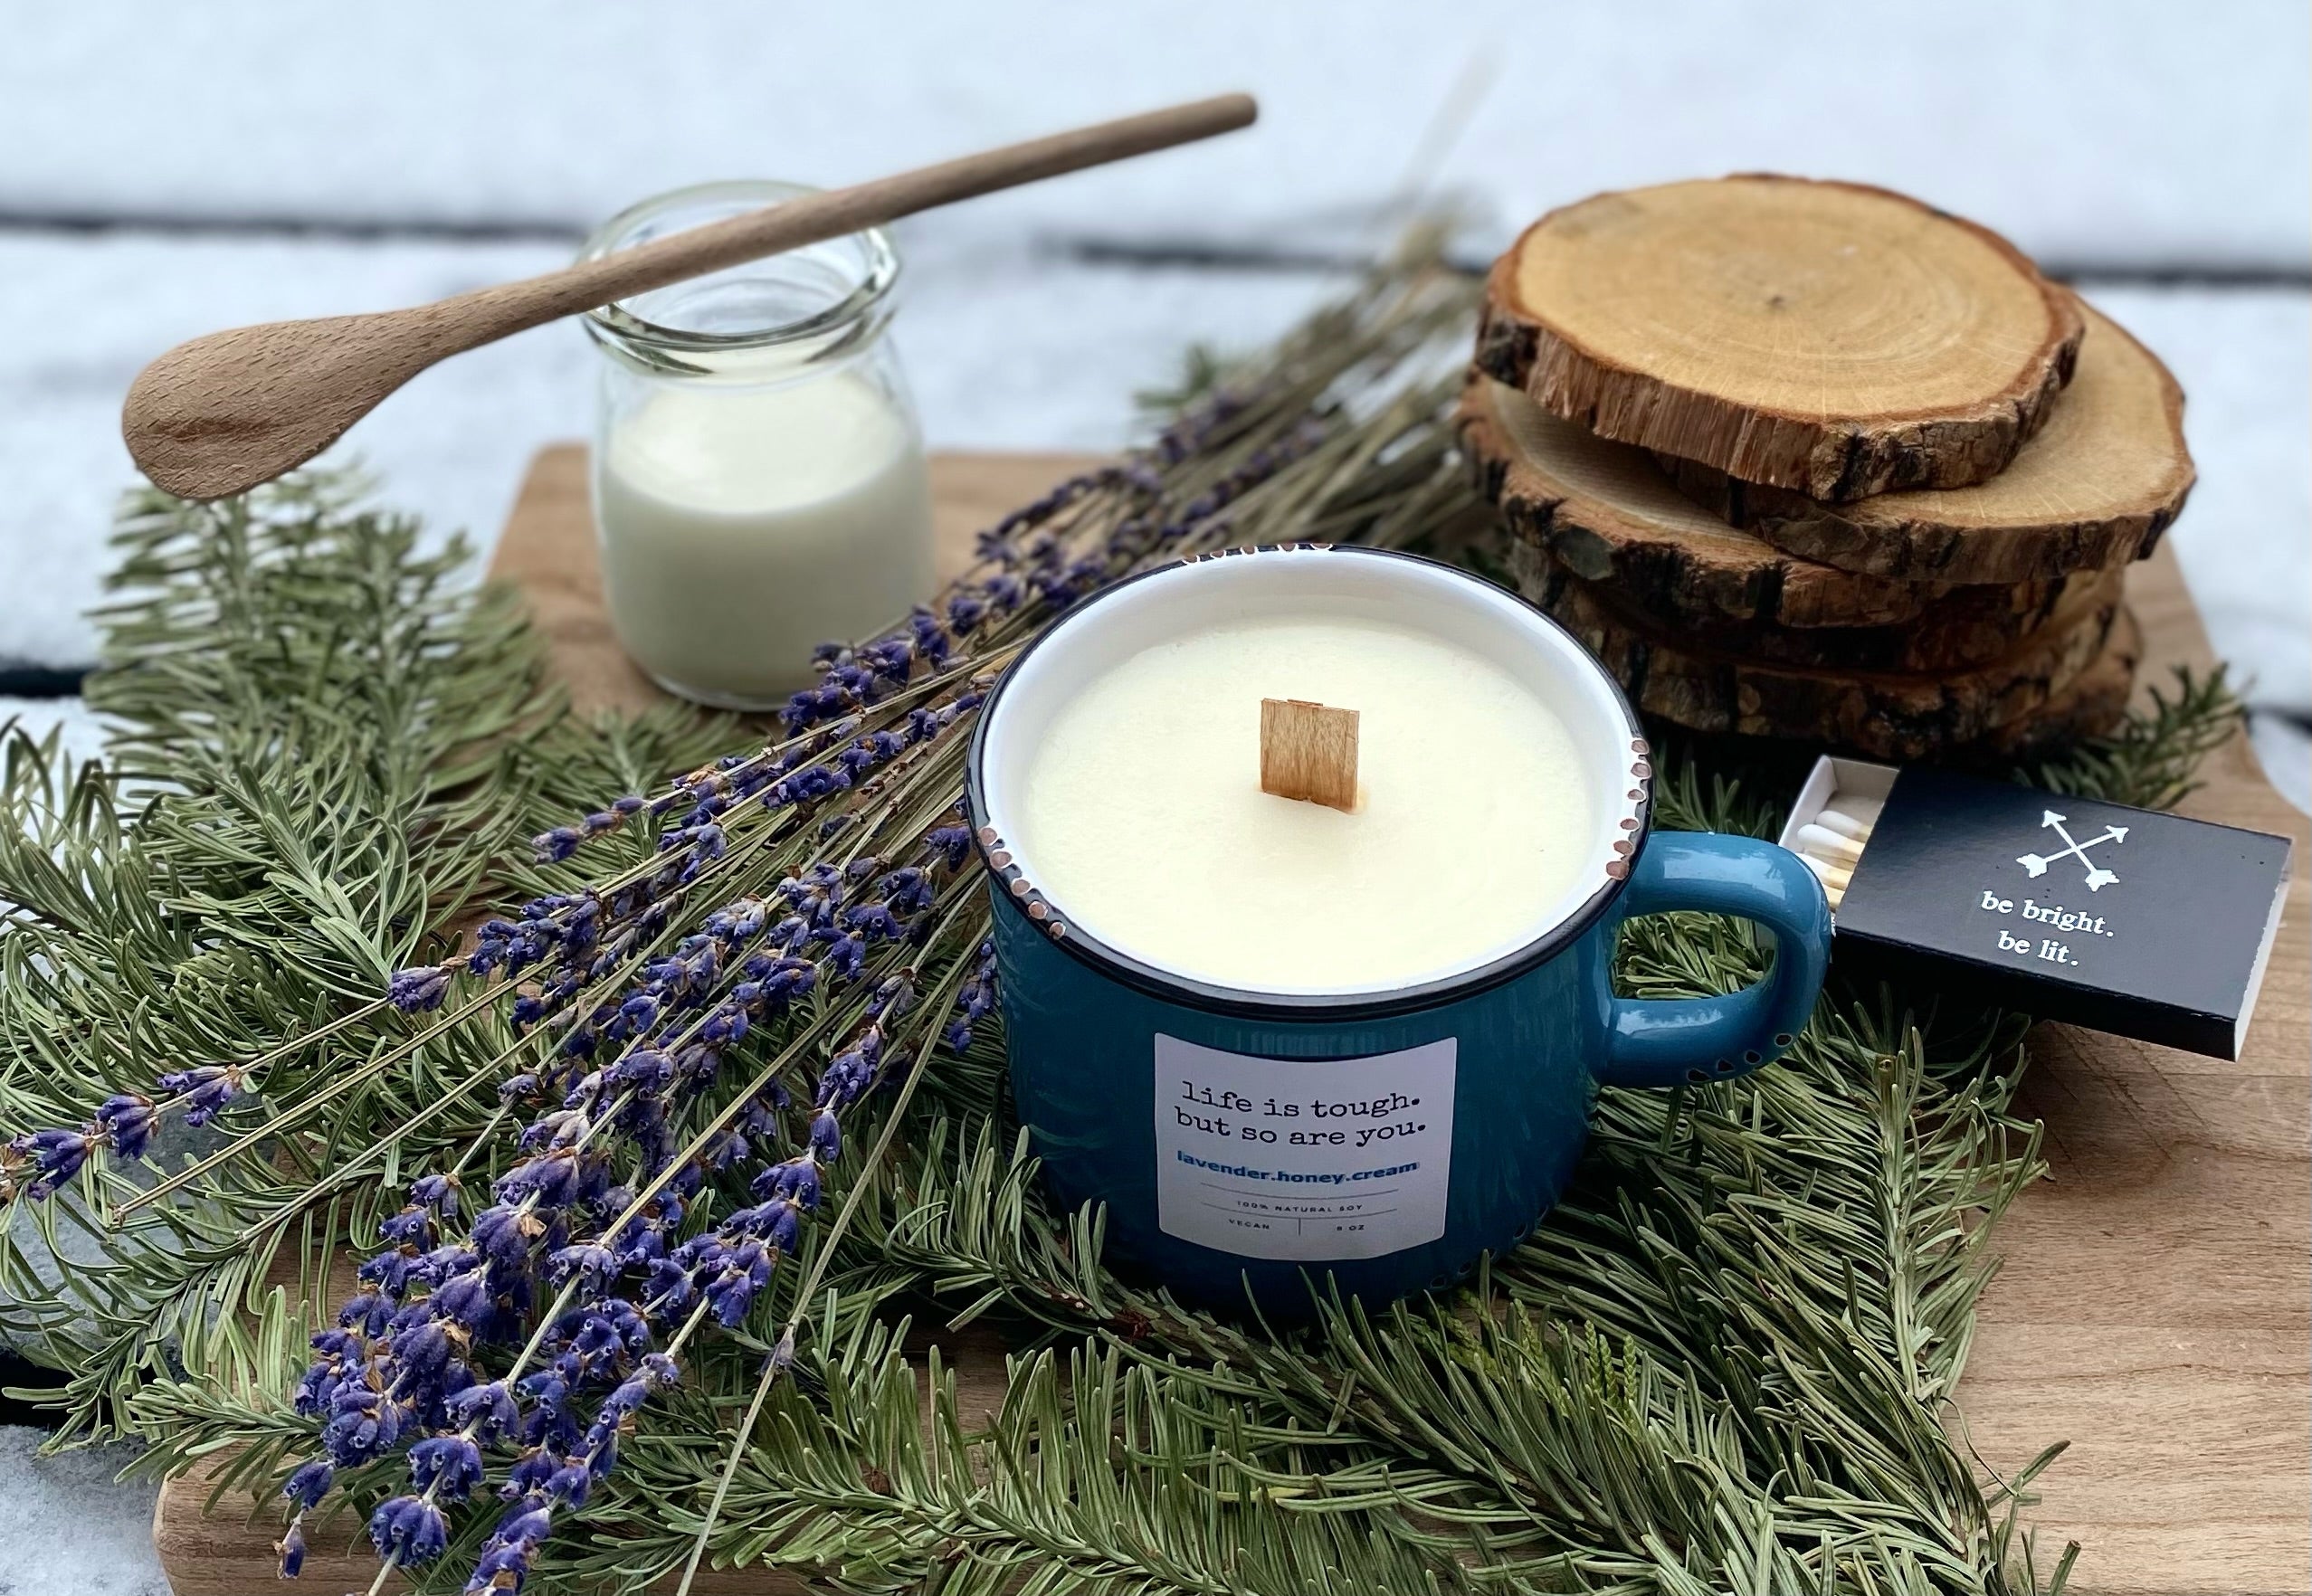 Mug candle - blue Lavender honey cream